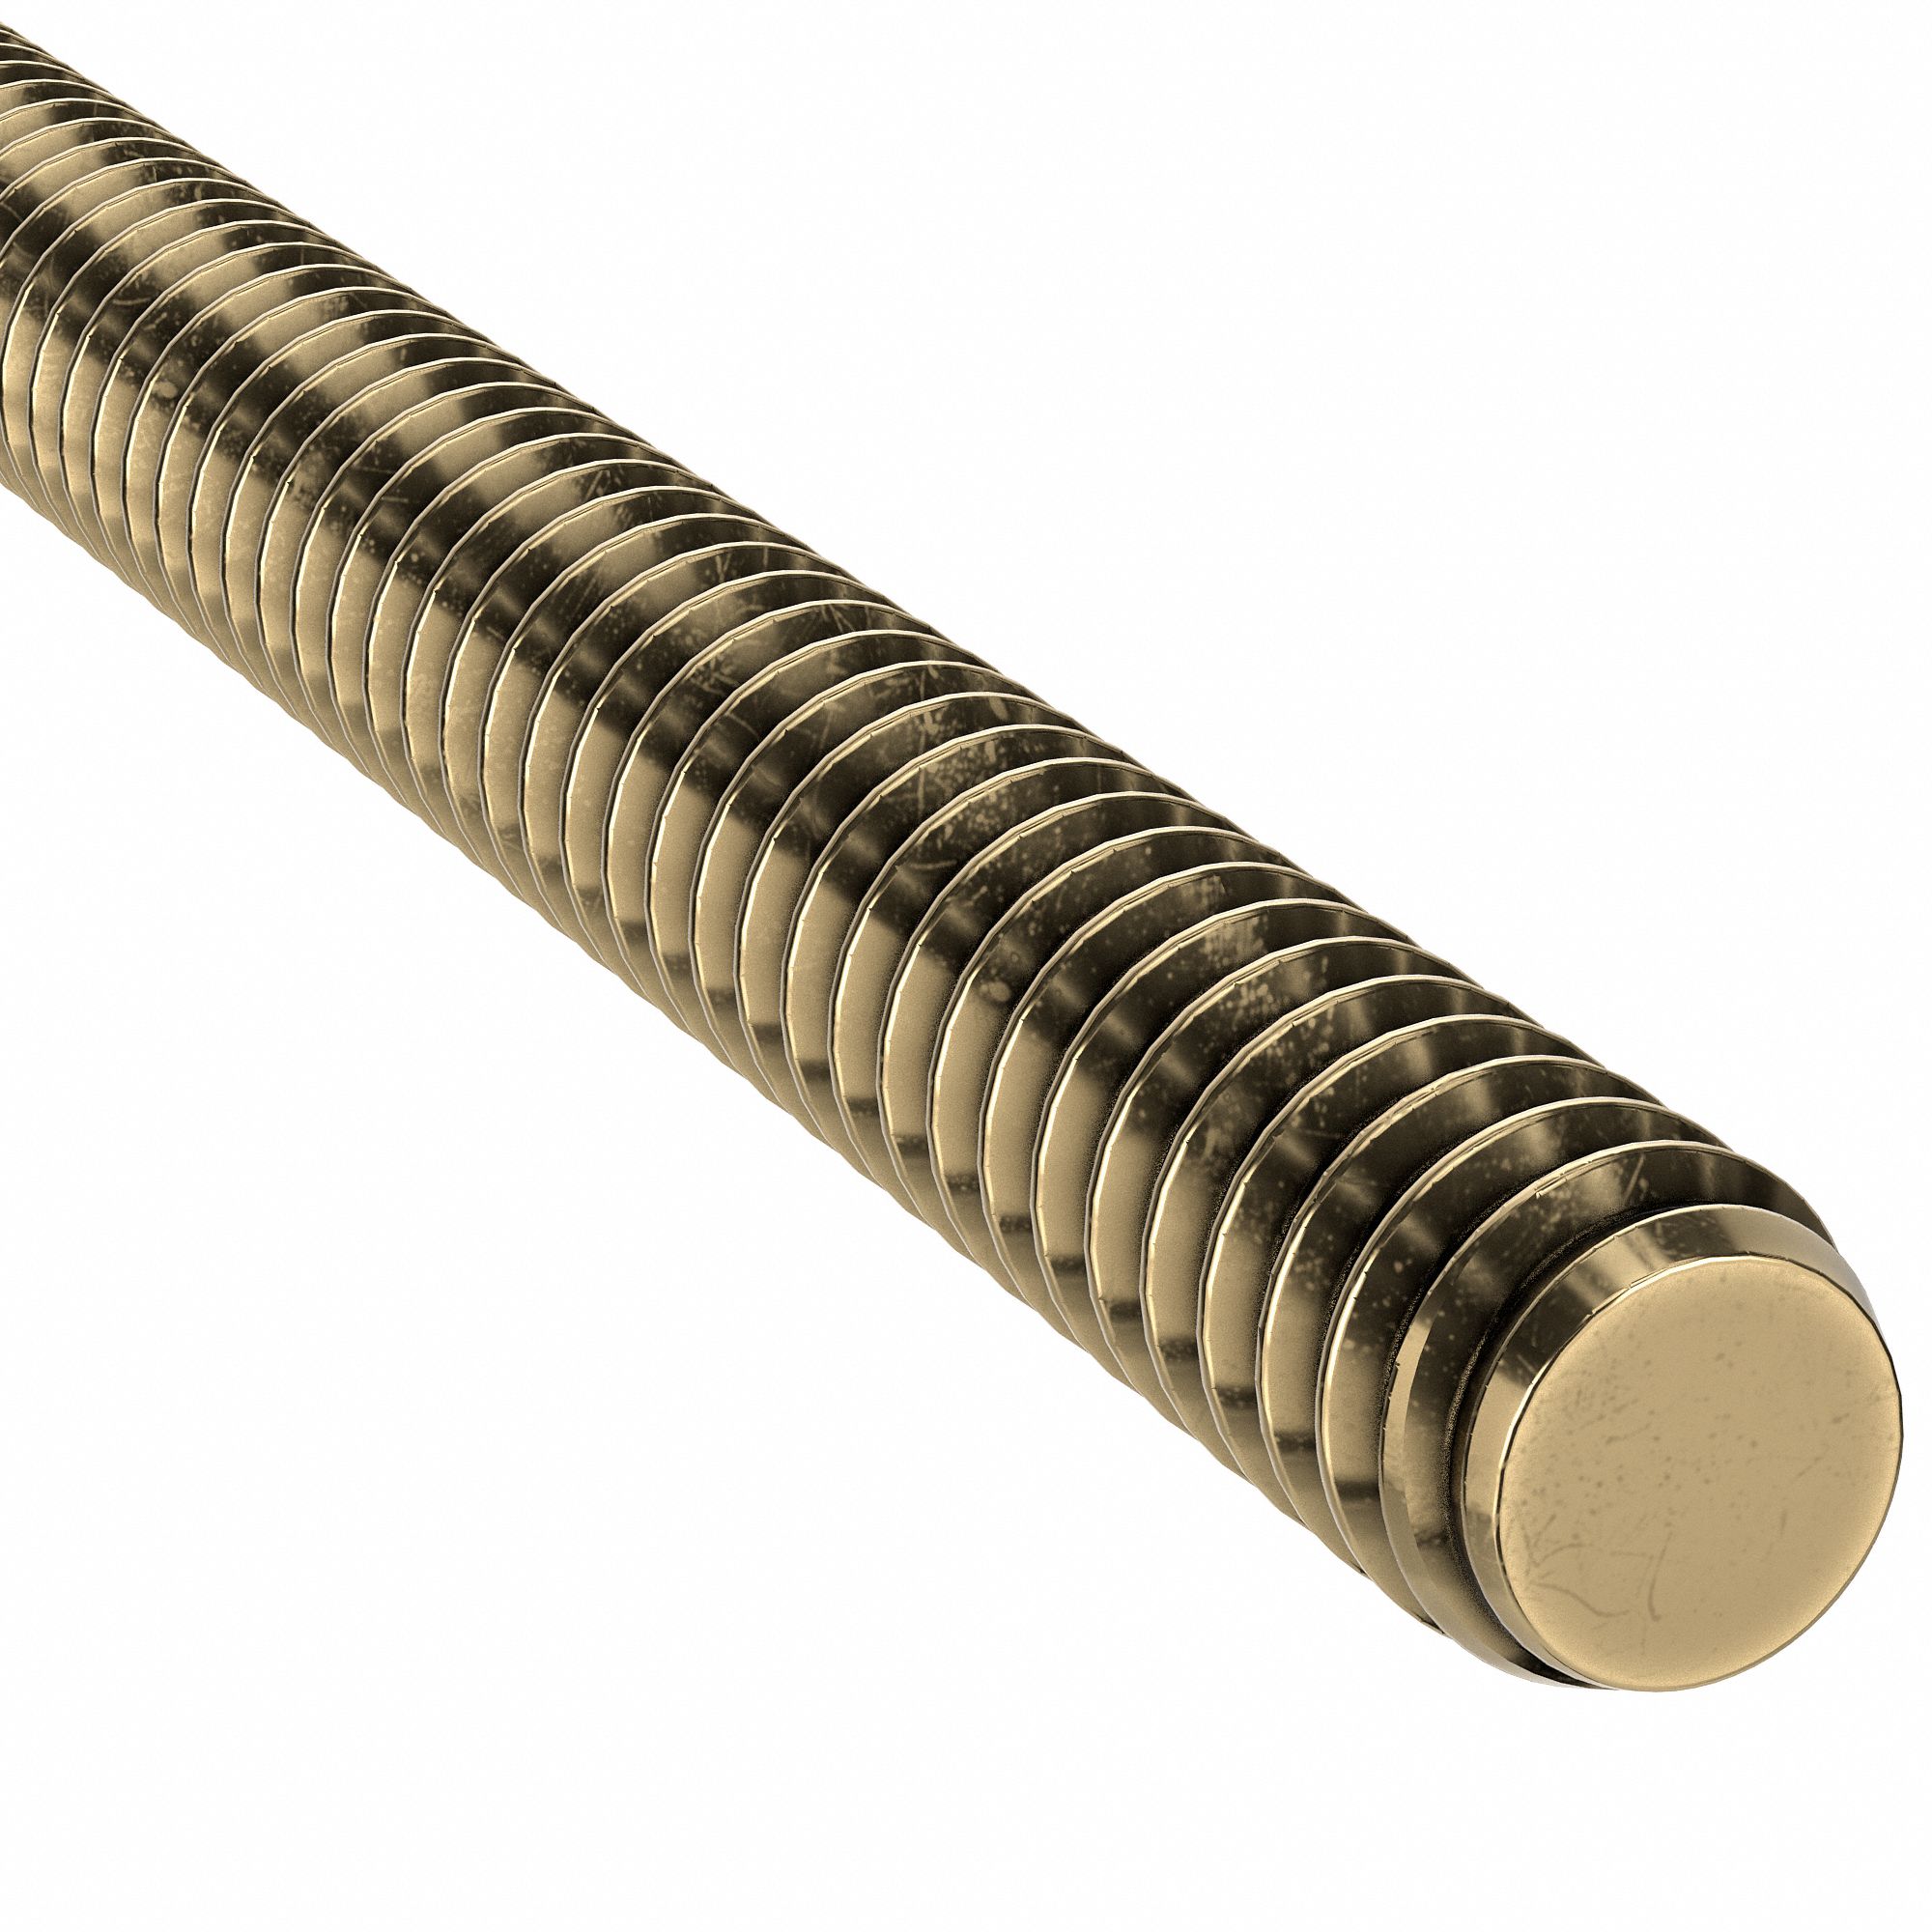 24 Length Brass Fully Threaded Rod 1/4-28 Thread Size Right Hand Threads